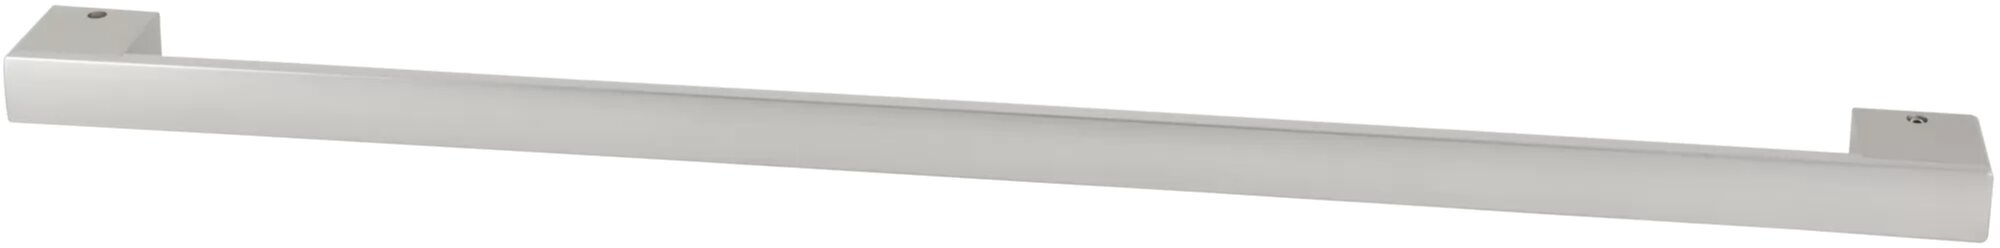 Ручка холодильника Bosch Side-by-Side, 11033321